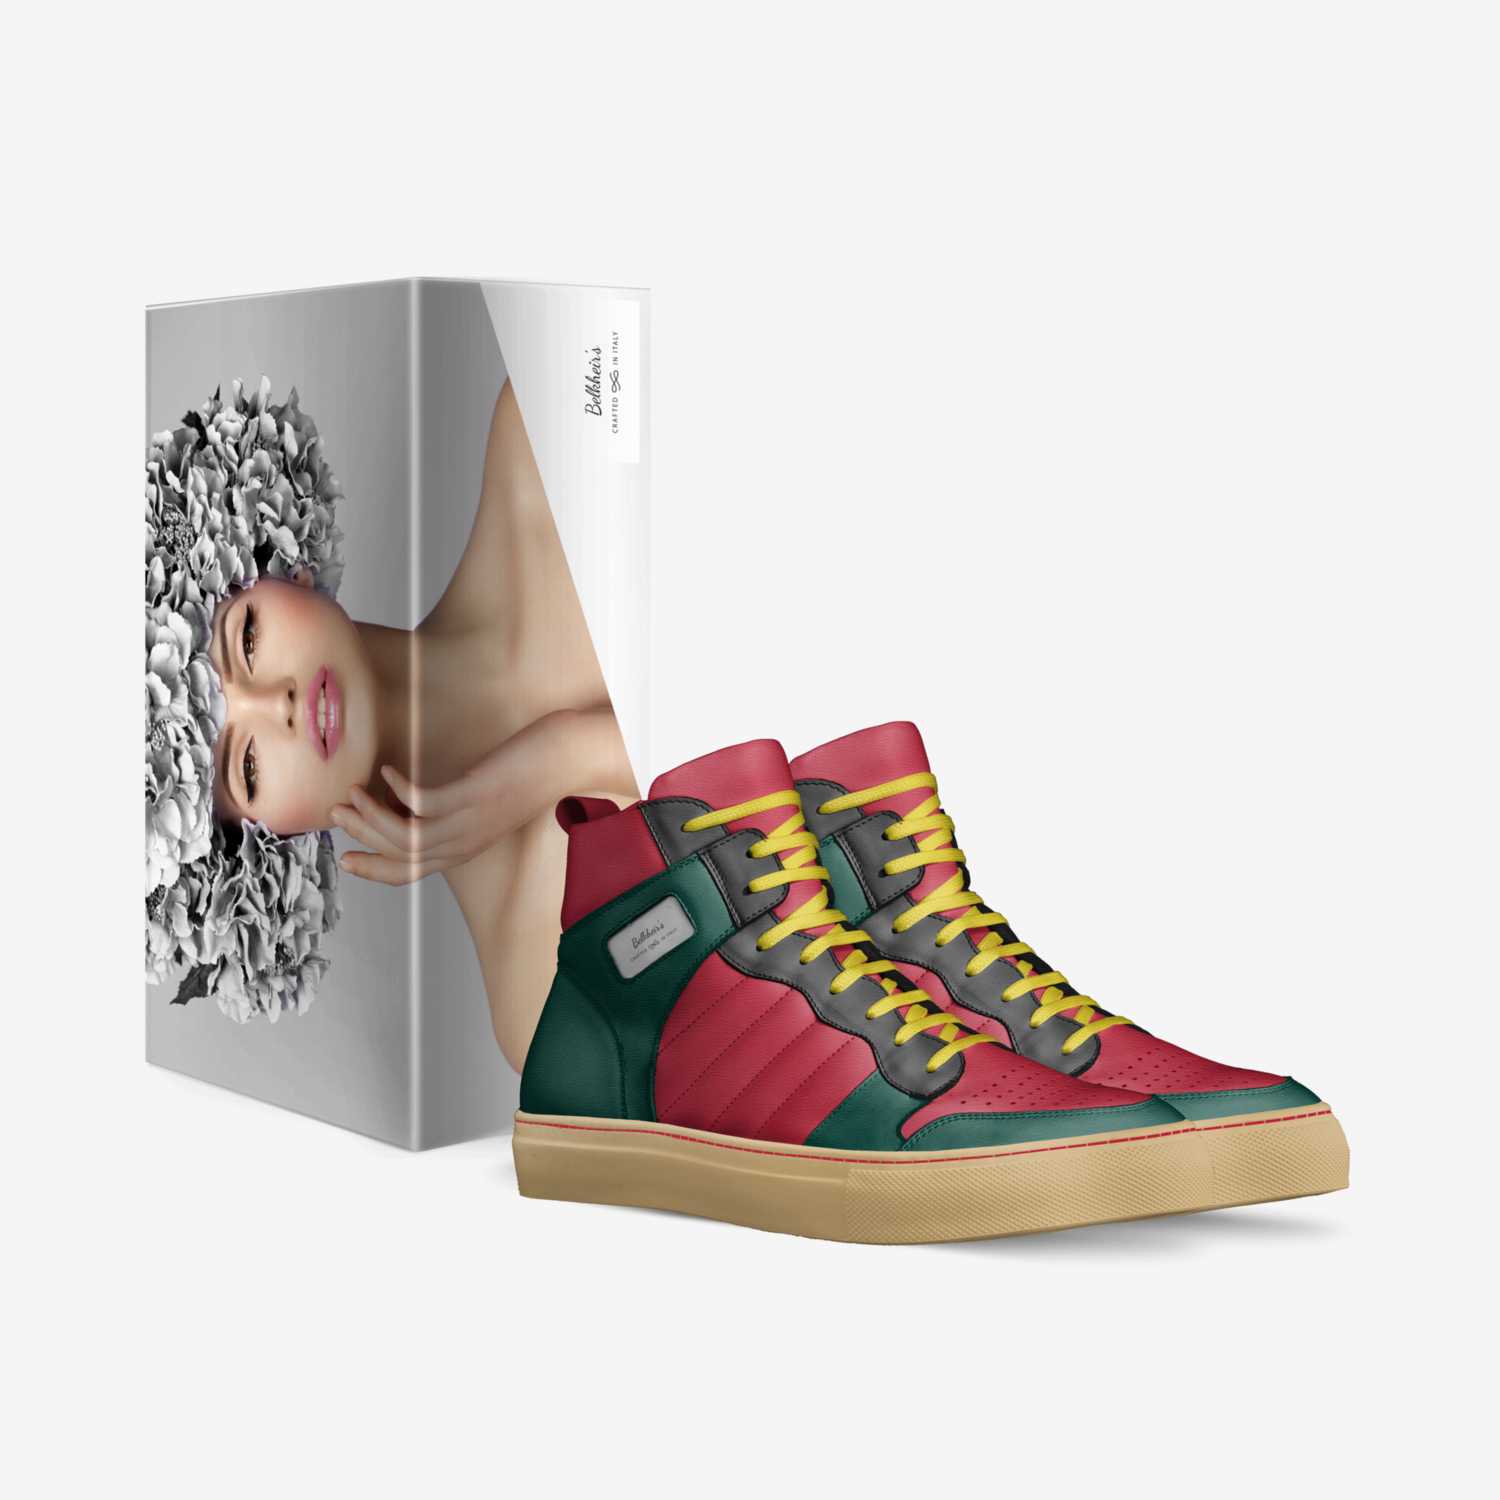 Belkheir's custom made in Italy shoes by Abdul Belkheir | Box view